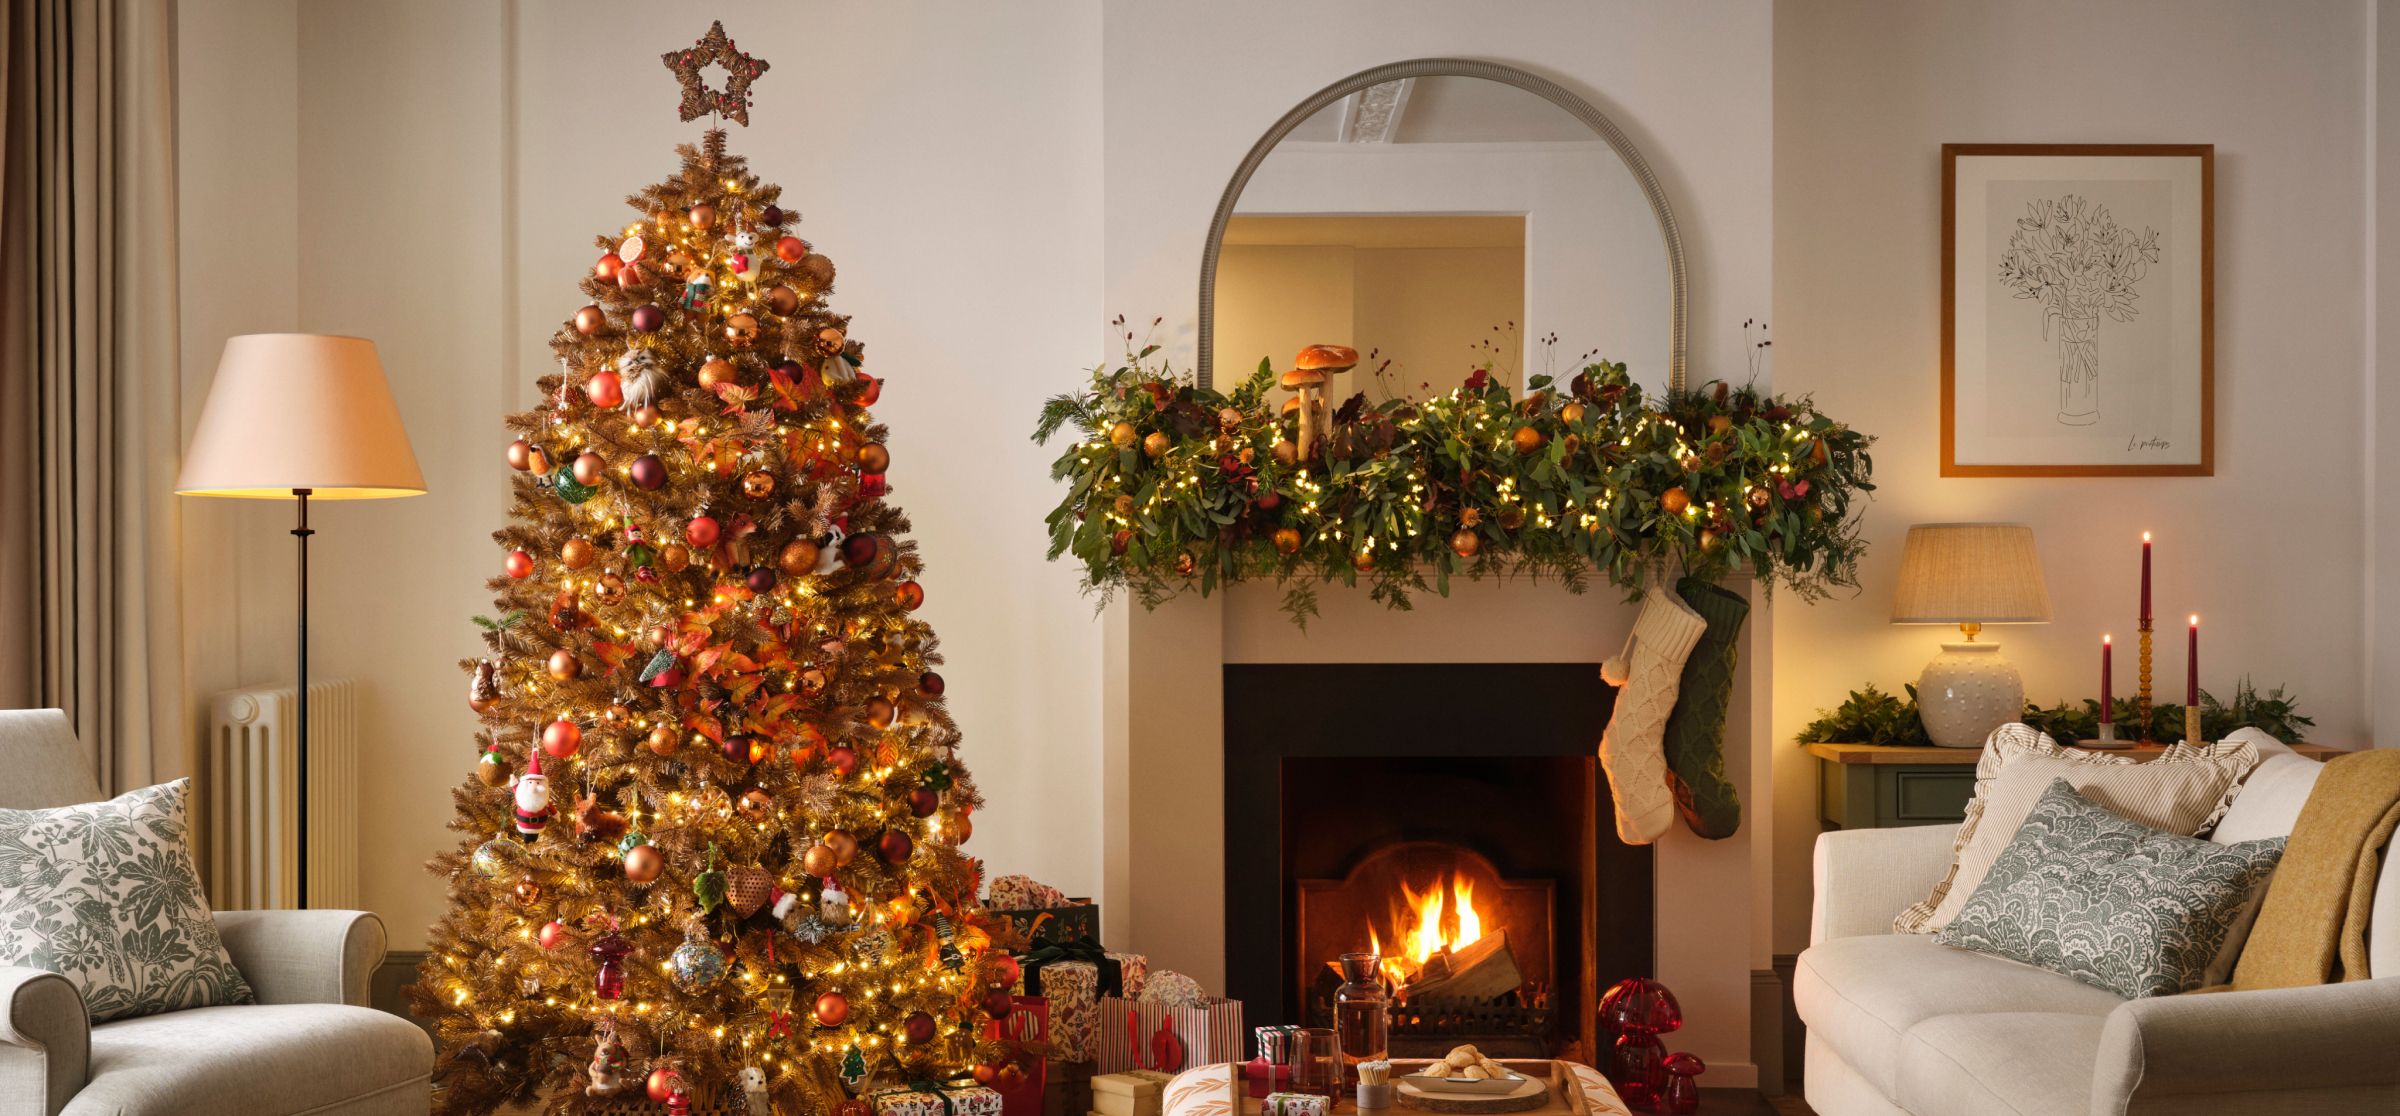 How I Plan My Christmas Home Decor - Tip, Tricks, and Inspiraiton